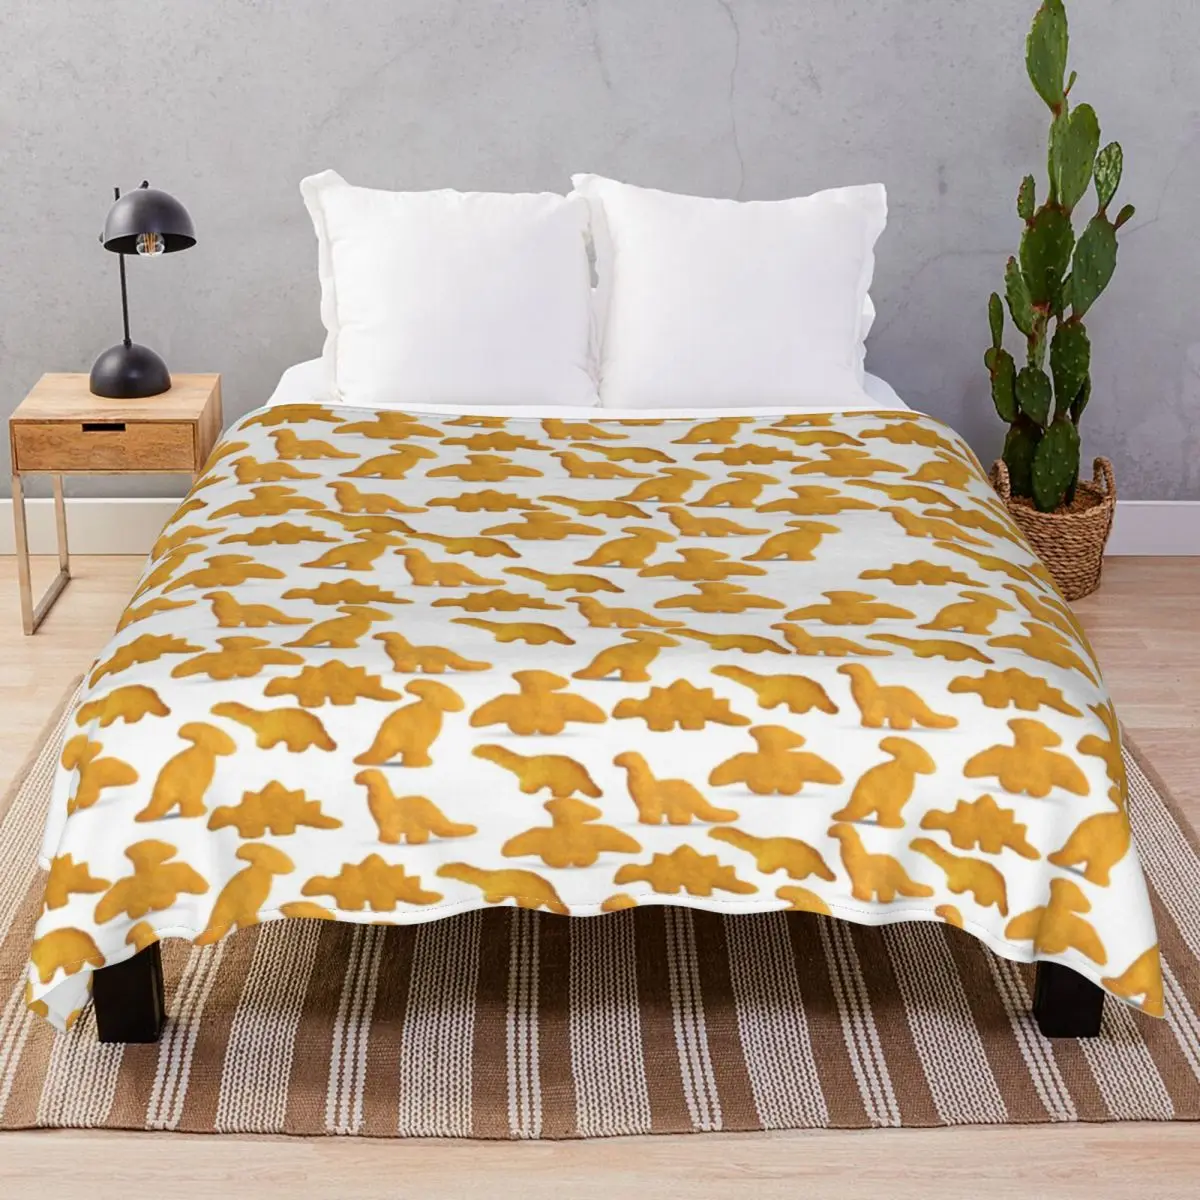 Dinosaur Chicken Nuggets Blanket Fleece All Season Comfortable Throw Blankets for Bed Sofa Travel Office